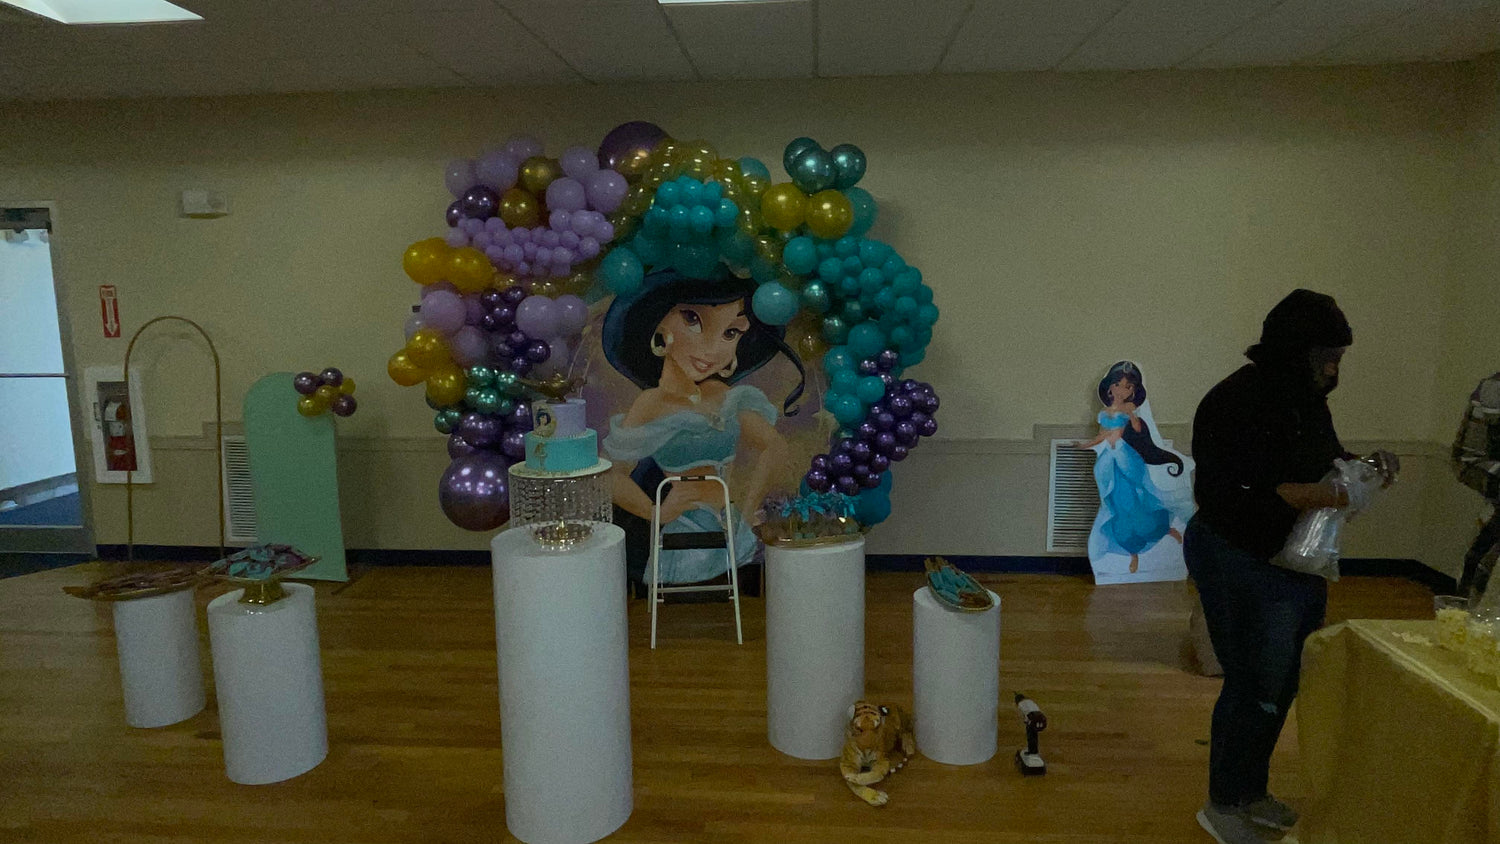 Princess Jasmine Aladdin Themed Party